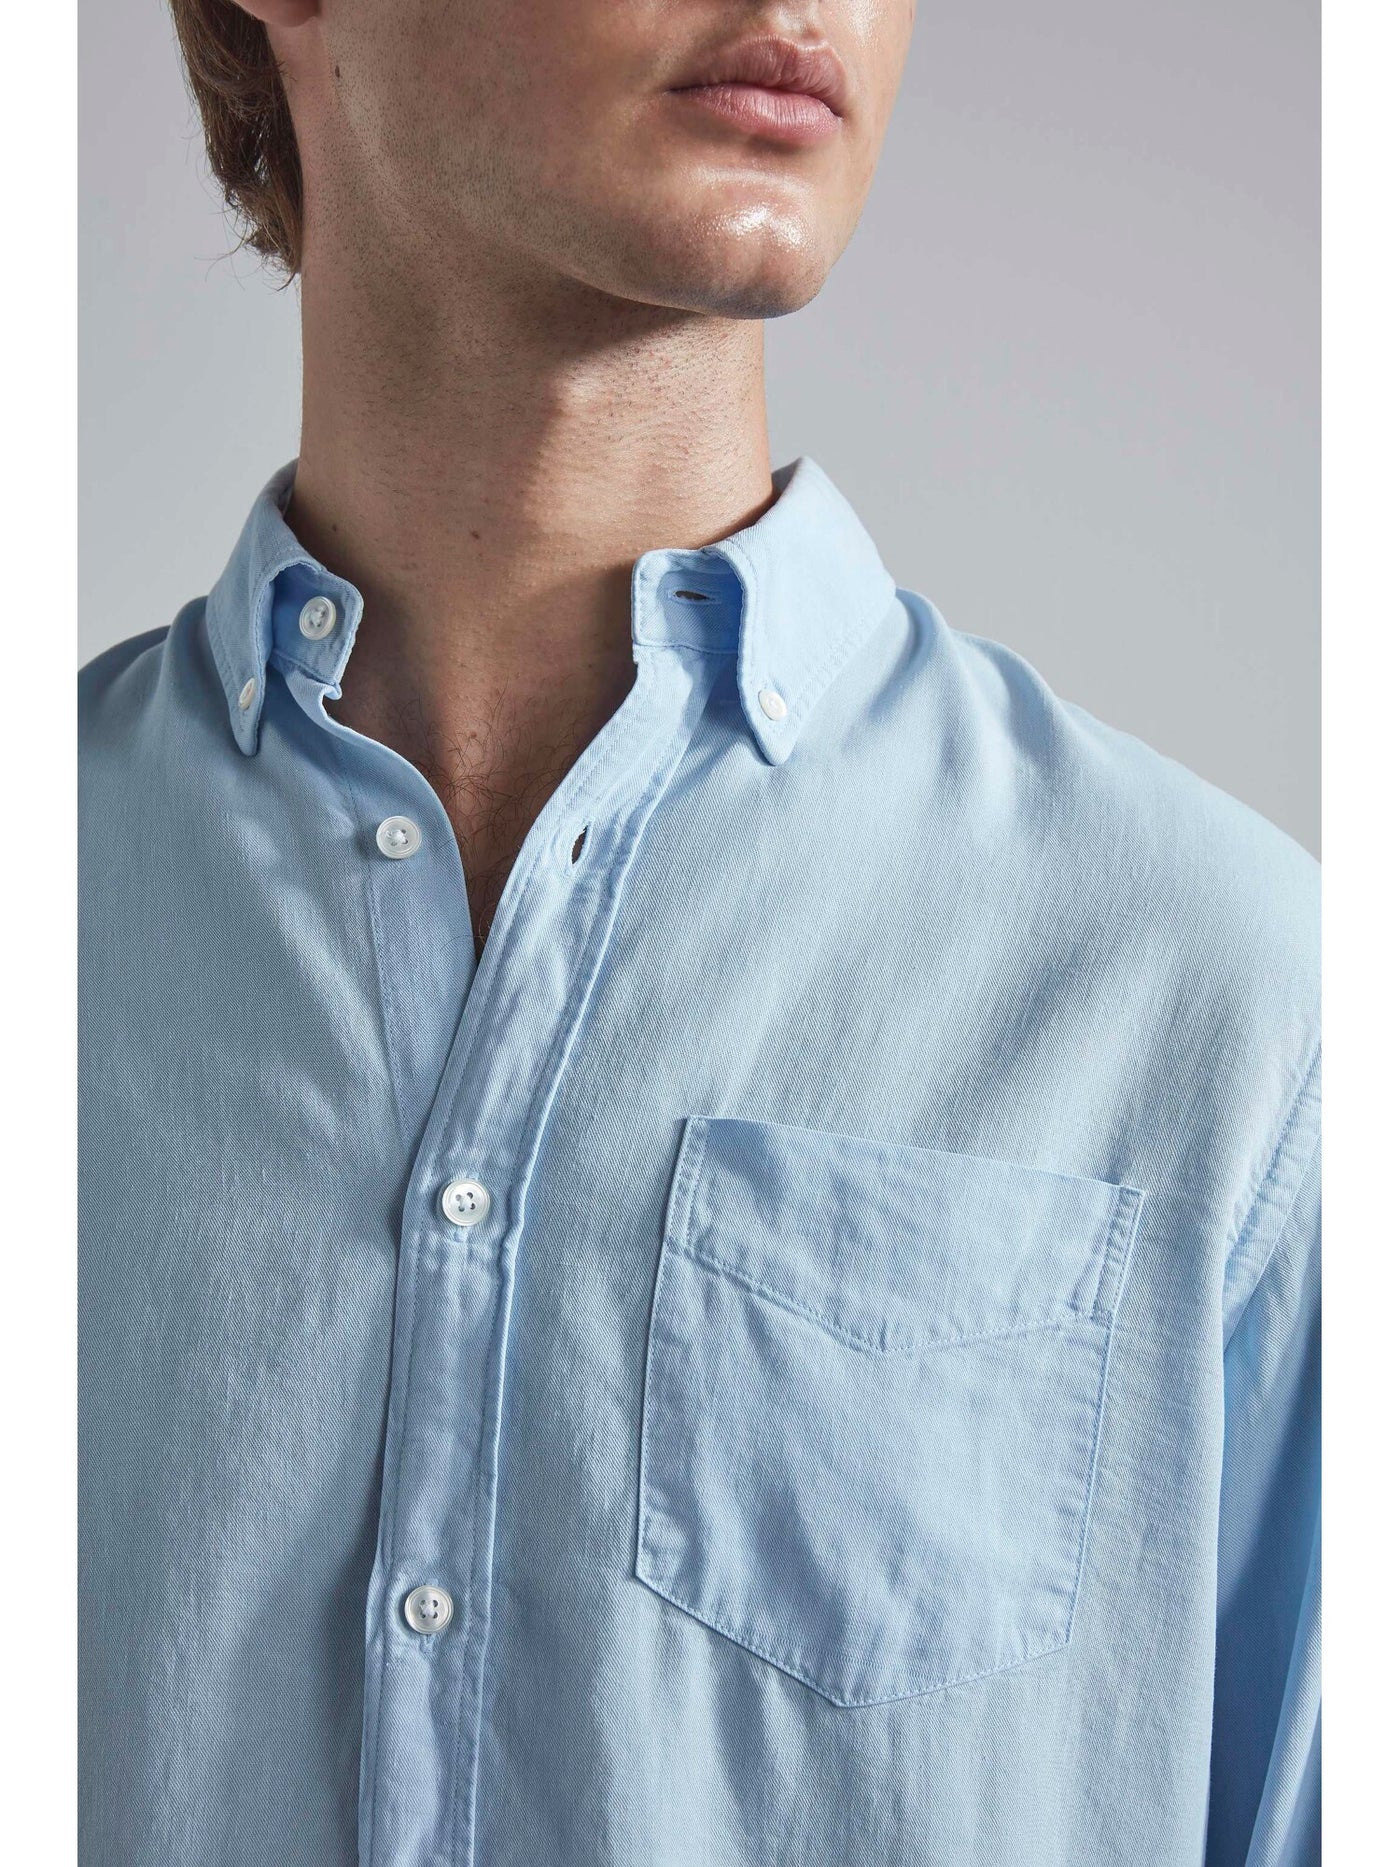 NO BOUNDARIES Mens Light Blue Classic Fit Button Down Casual Shirt XL